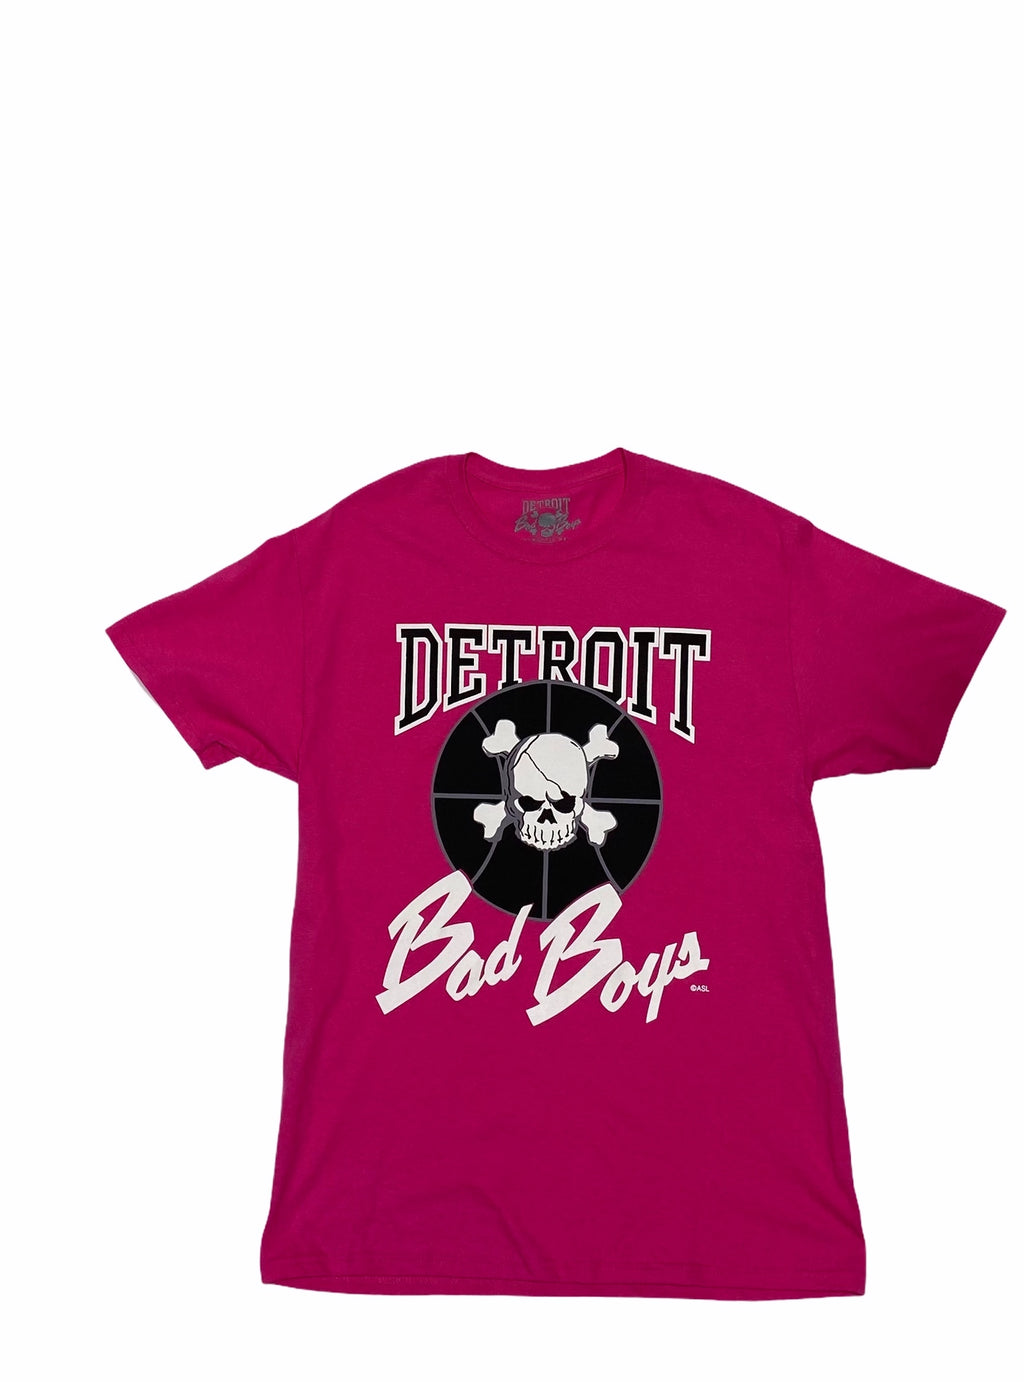 Pistons 313 Shop Detroit Bad Boys 313 T Shirt